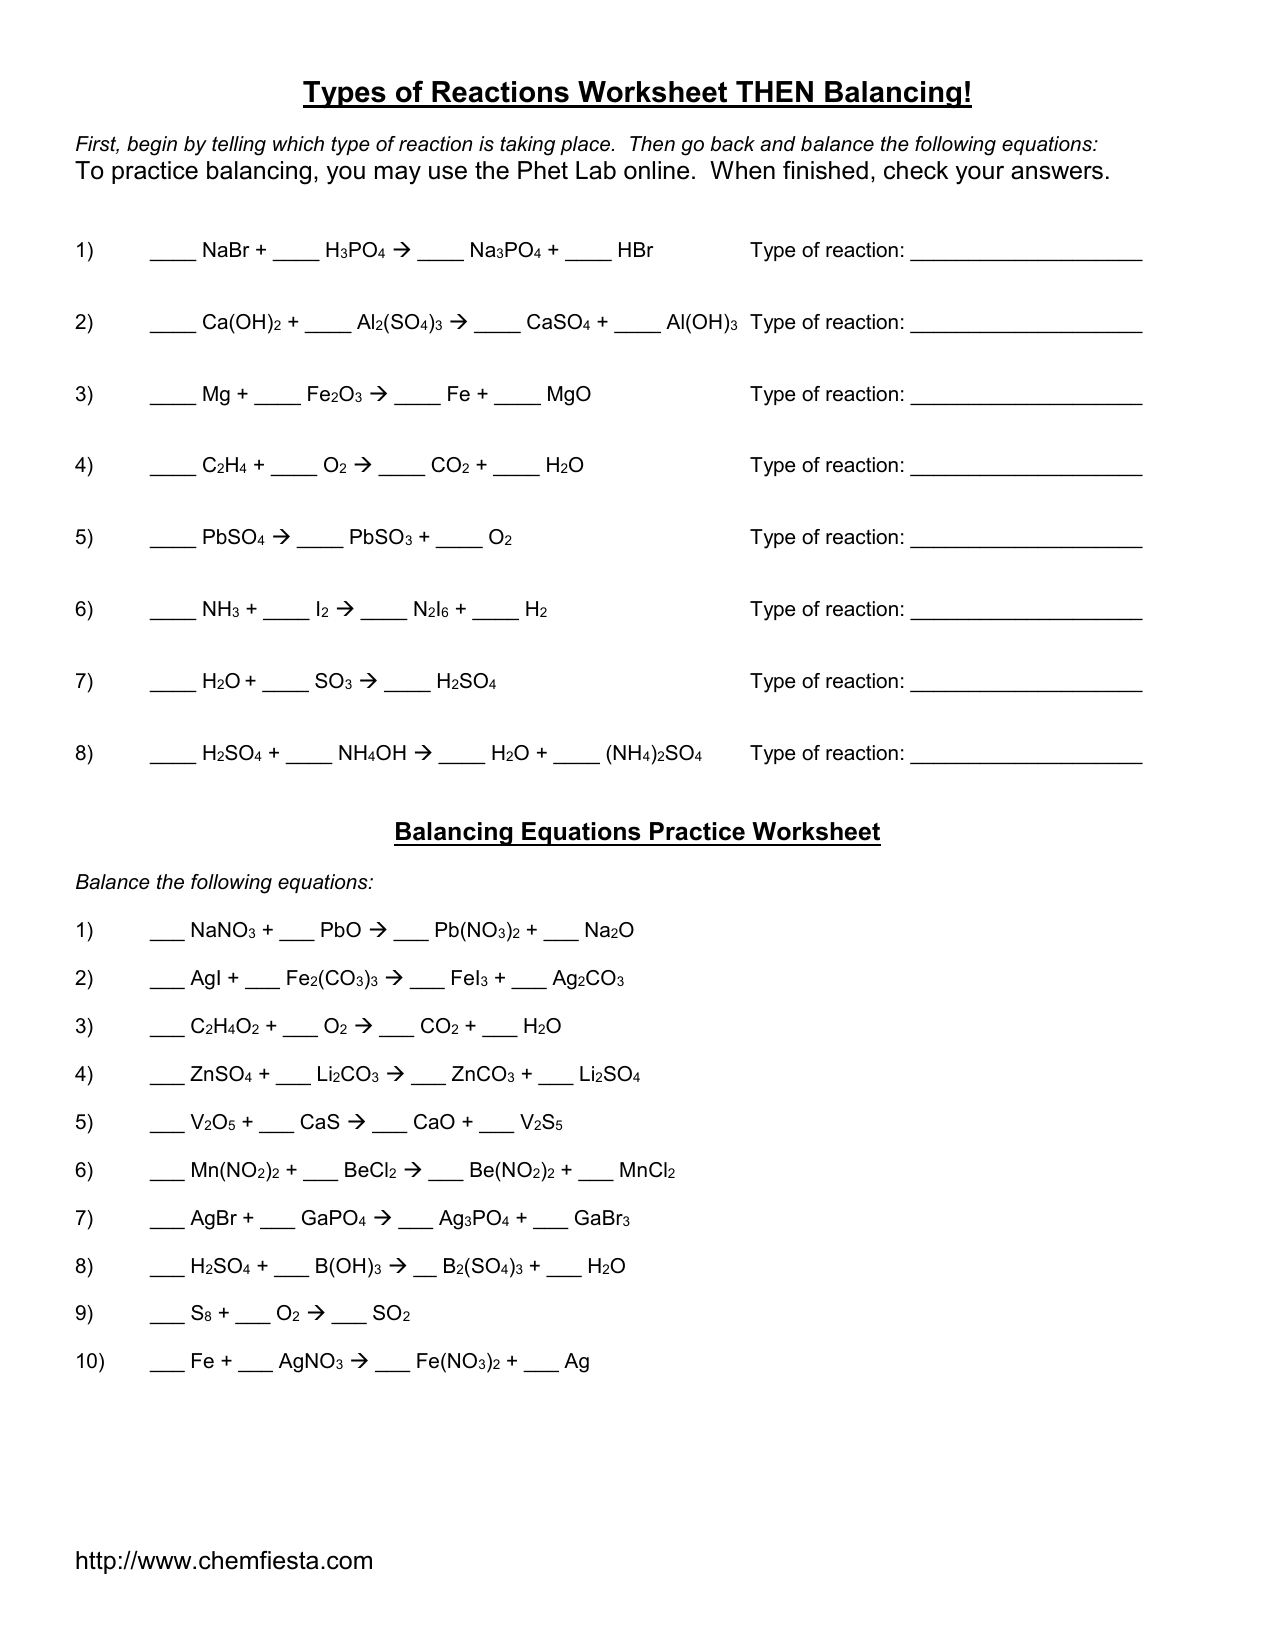 Balancing Equations Practice Worksheet Answer Key - Worksheet List Pertaining To Balancing Equations Practice Worksheet Answers